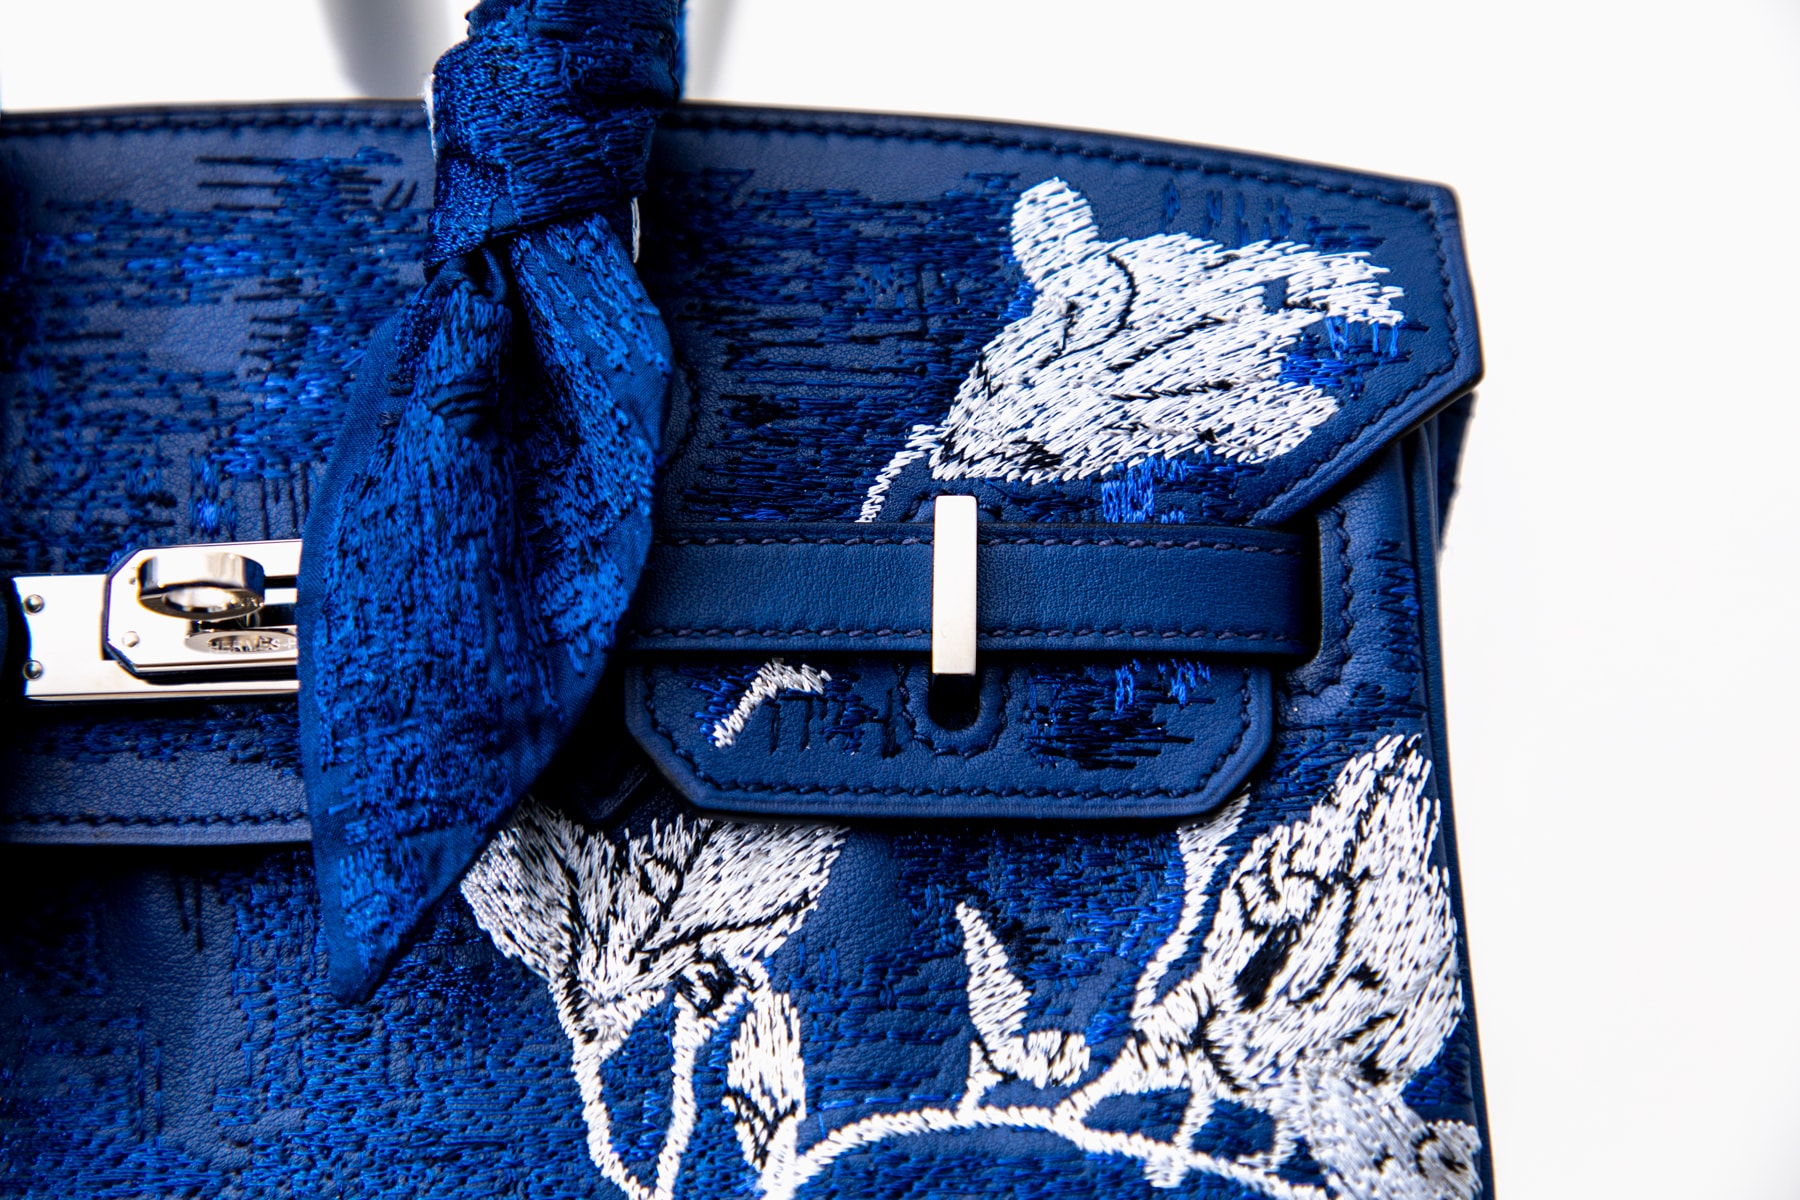 Hermès Birkin by Jay Ahr Closer Looks Artist Studio Rework Paint Bandana Series